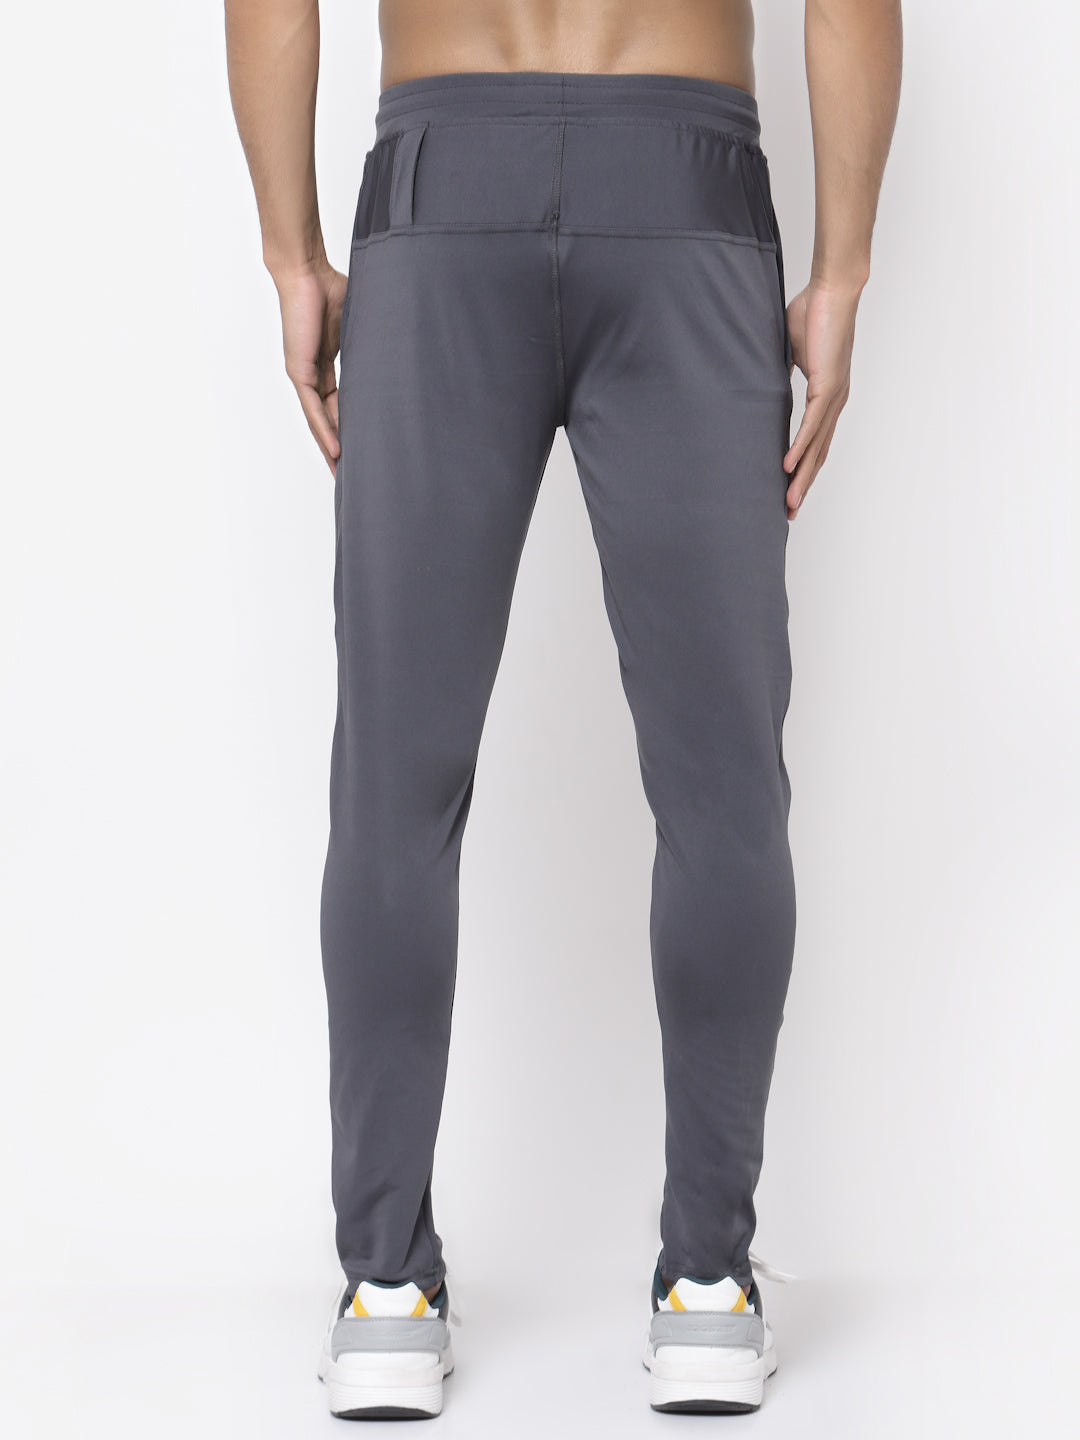 Steel Grey Trackpants - Yogue Activewear